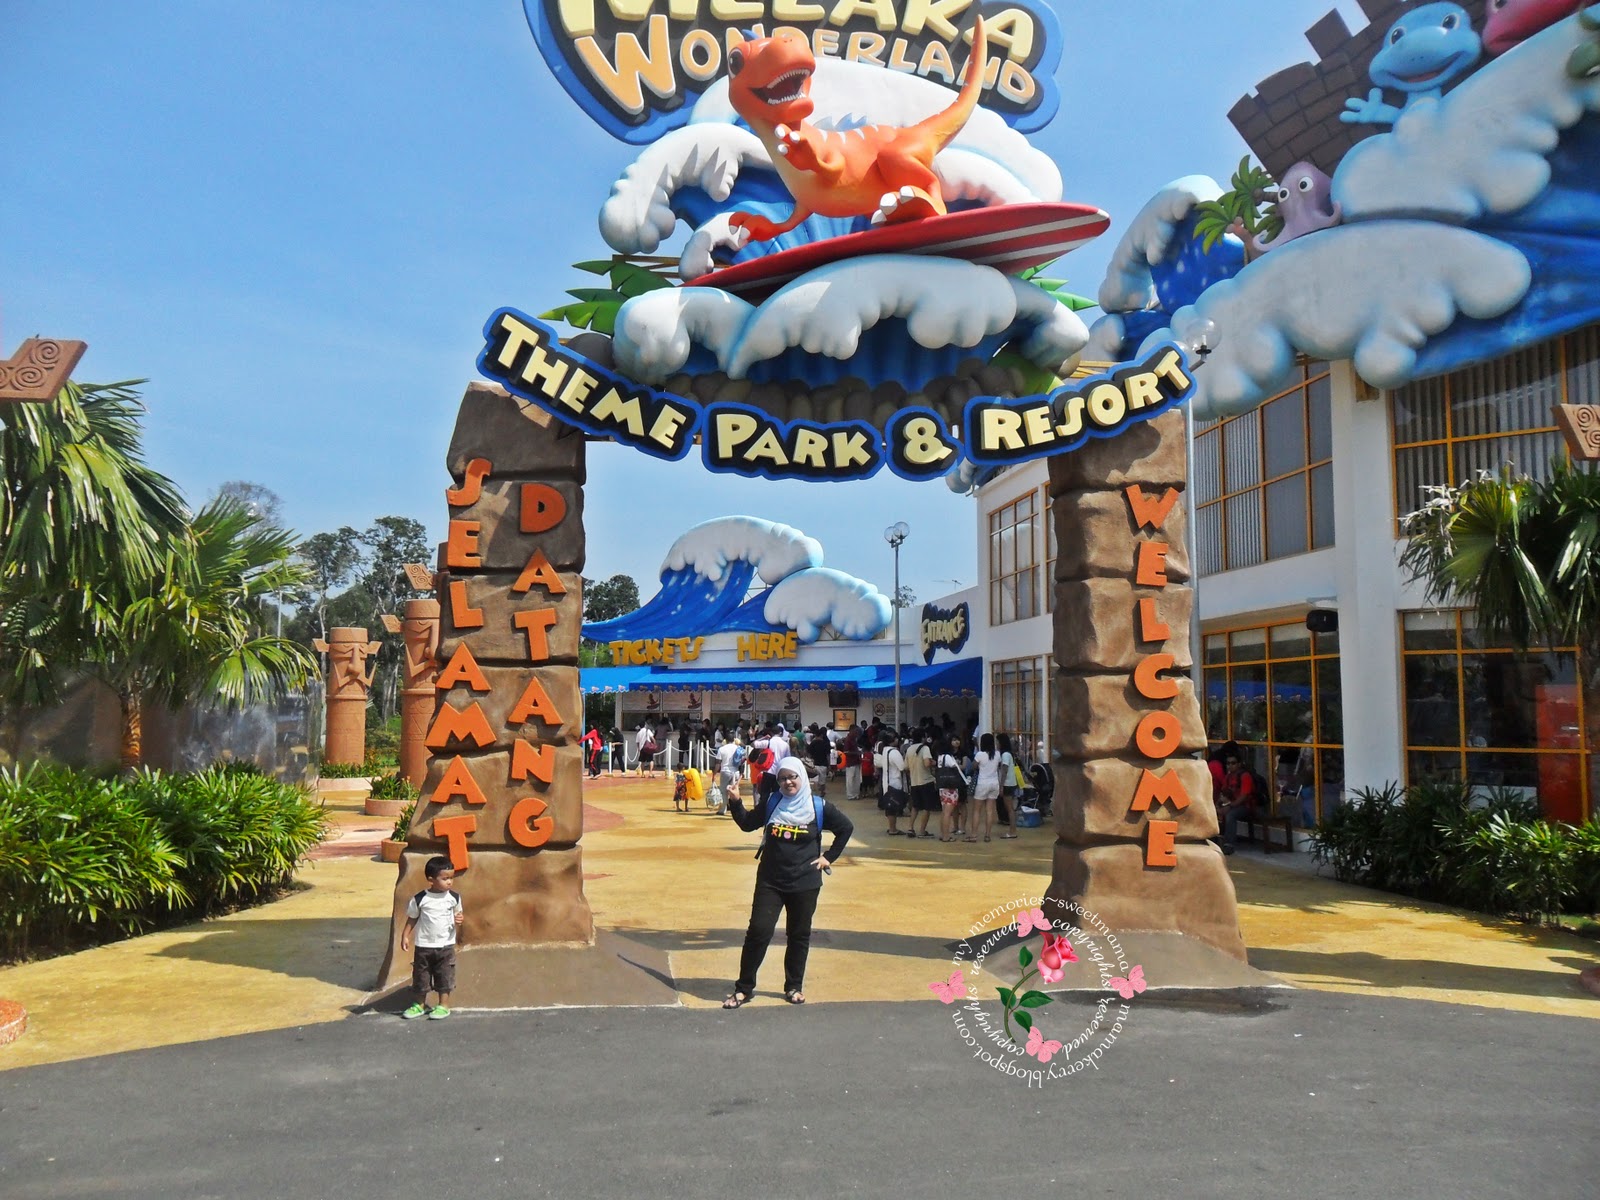 Sweetmama: Here We Come -Melaka Wonderland Theme Park & Resort